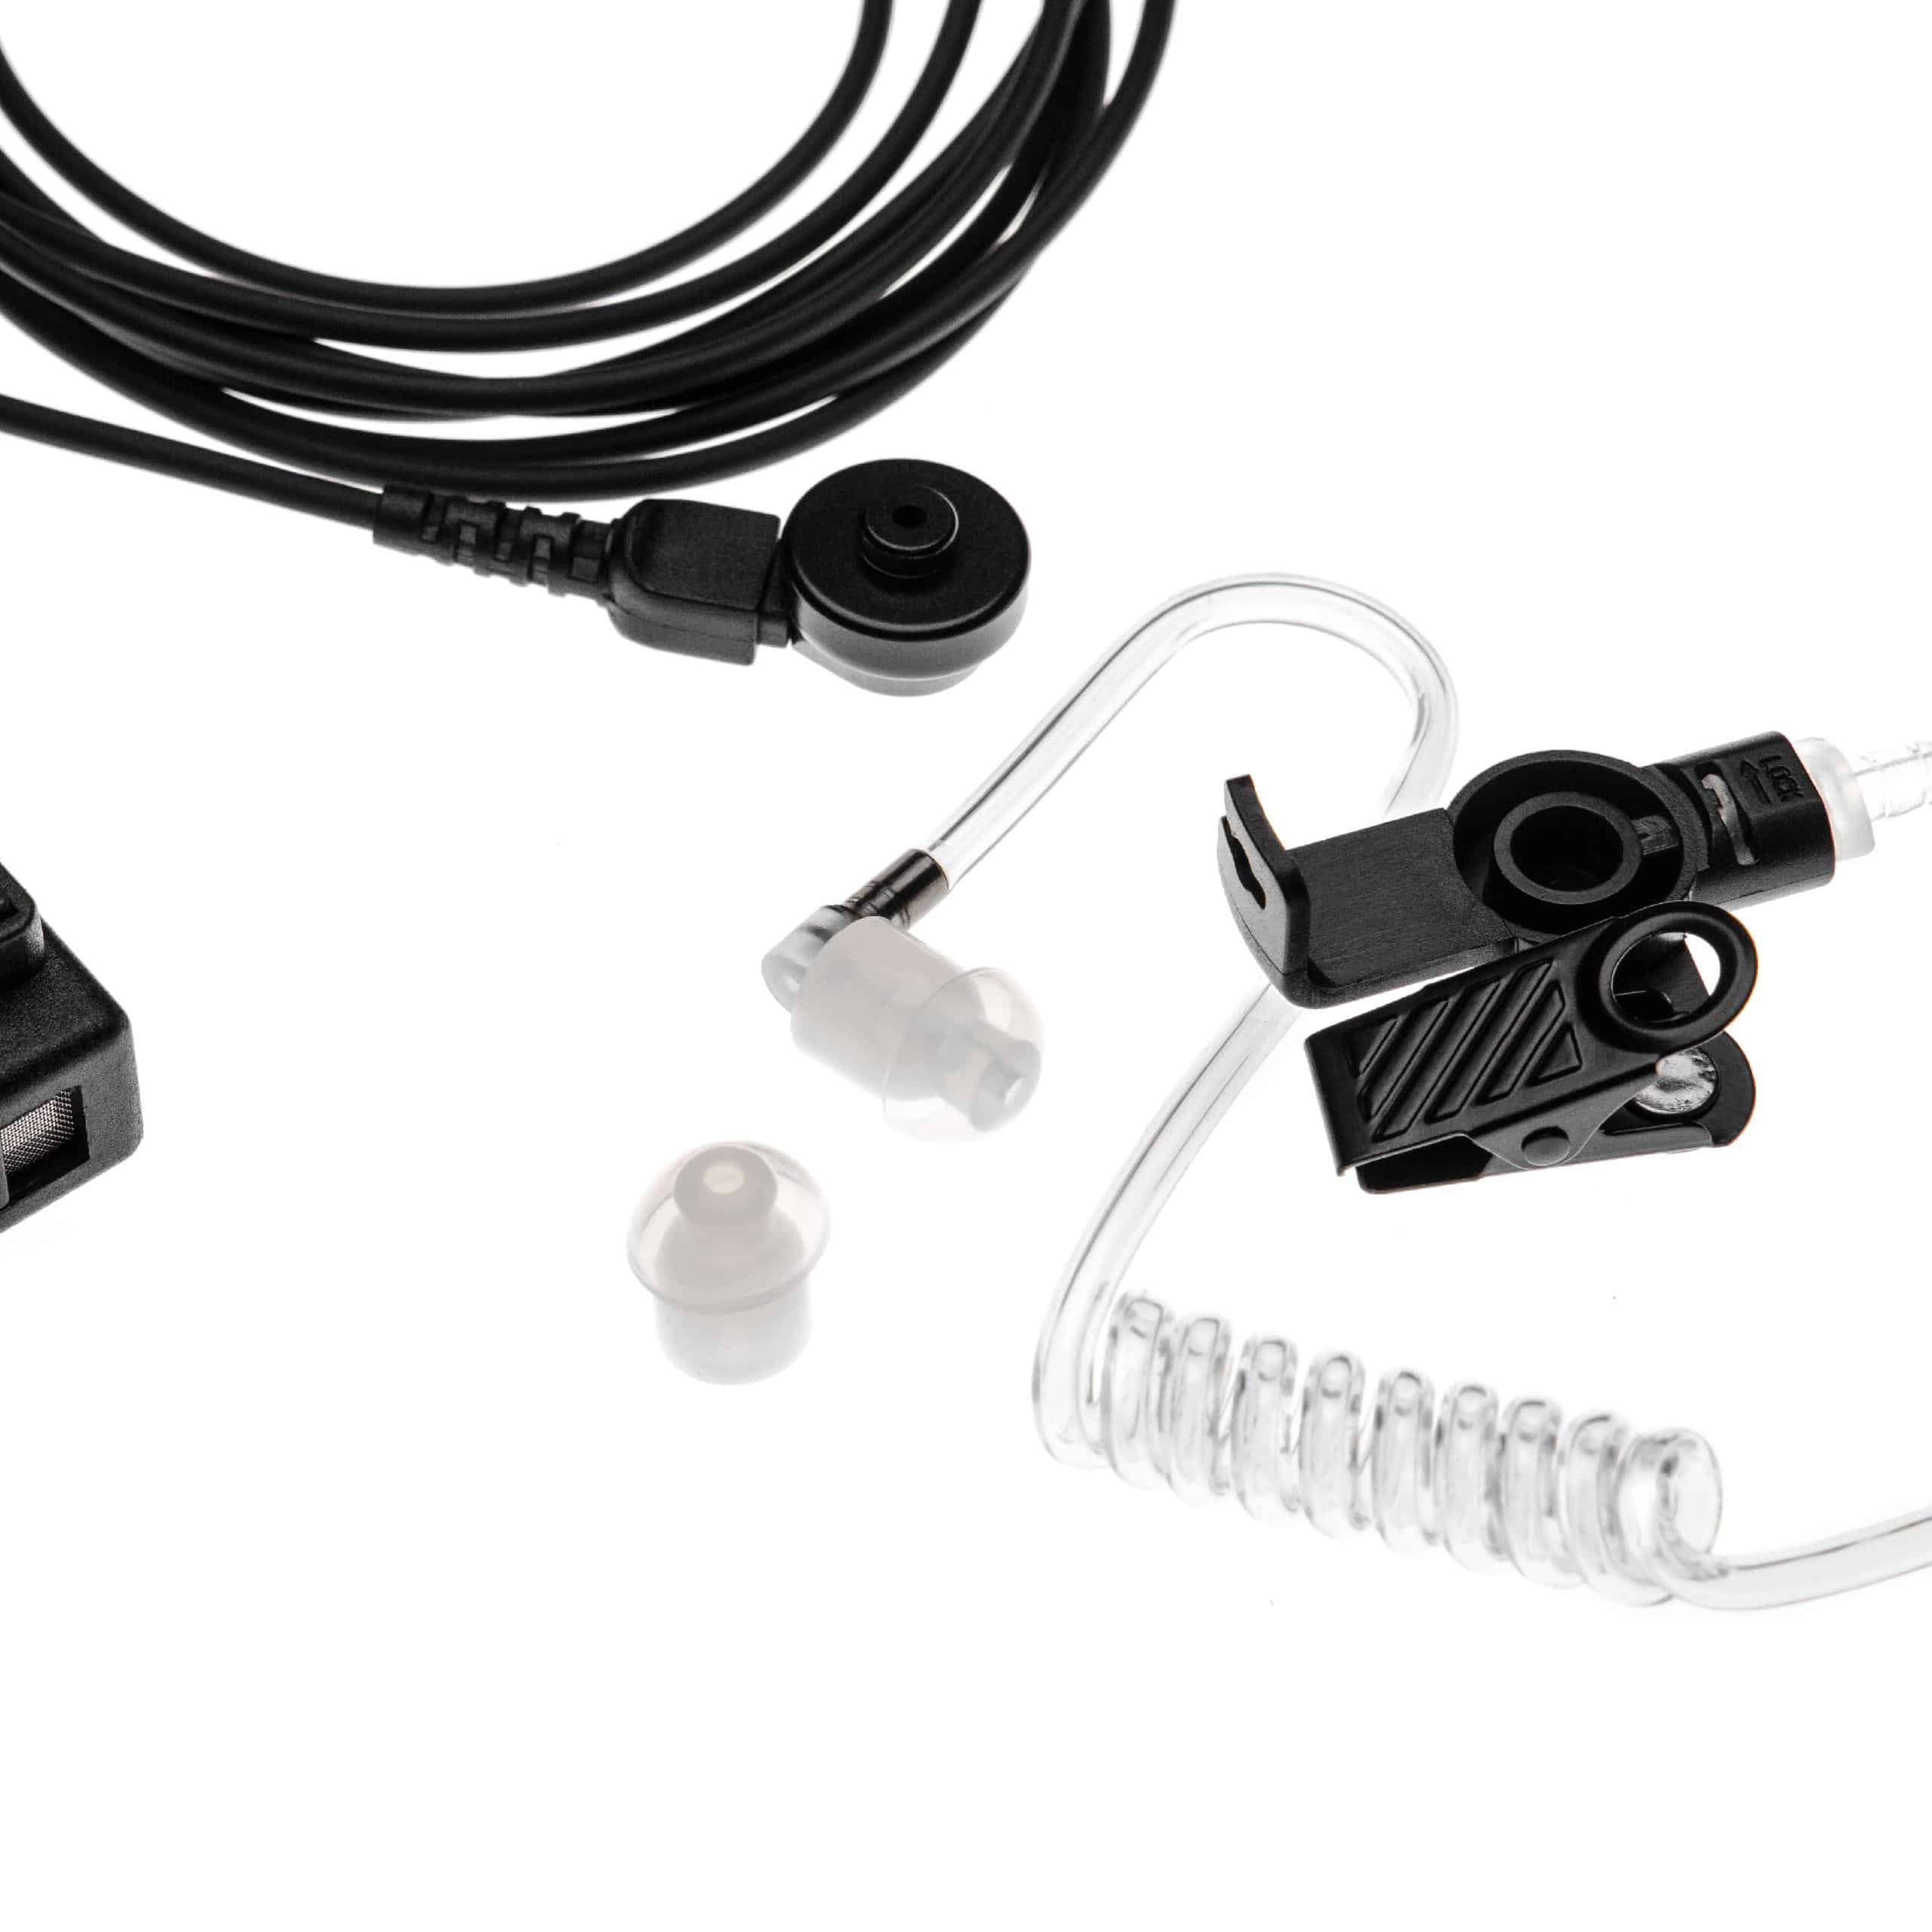 Security headset per ricetrasmittente Kenwood TK-2140E - trasparente / nero + microfono push-to-talk + support